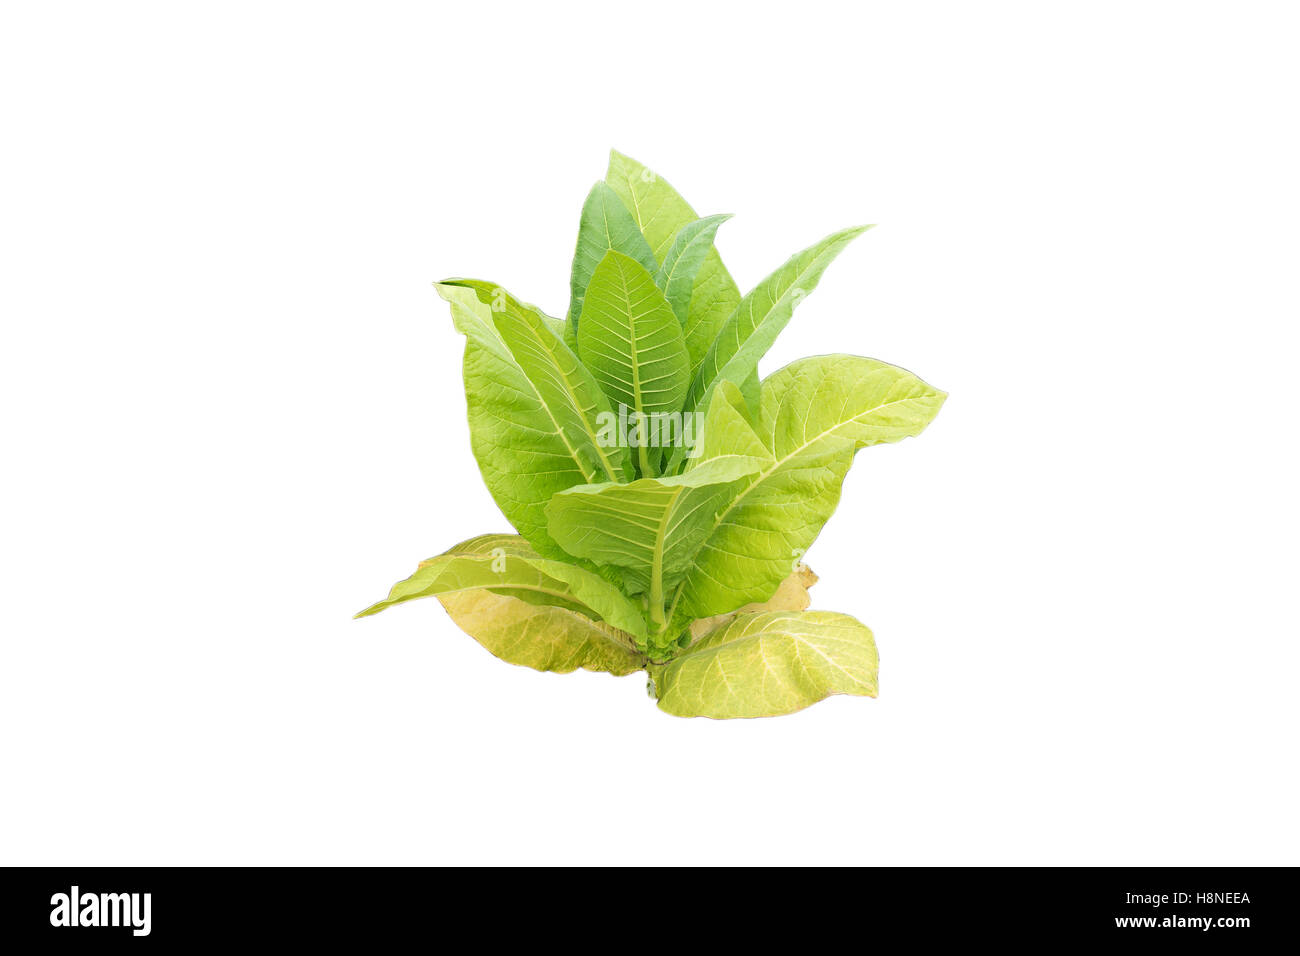 Dicut tobacco plant on white background. Stock Photo